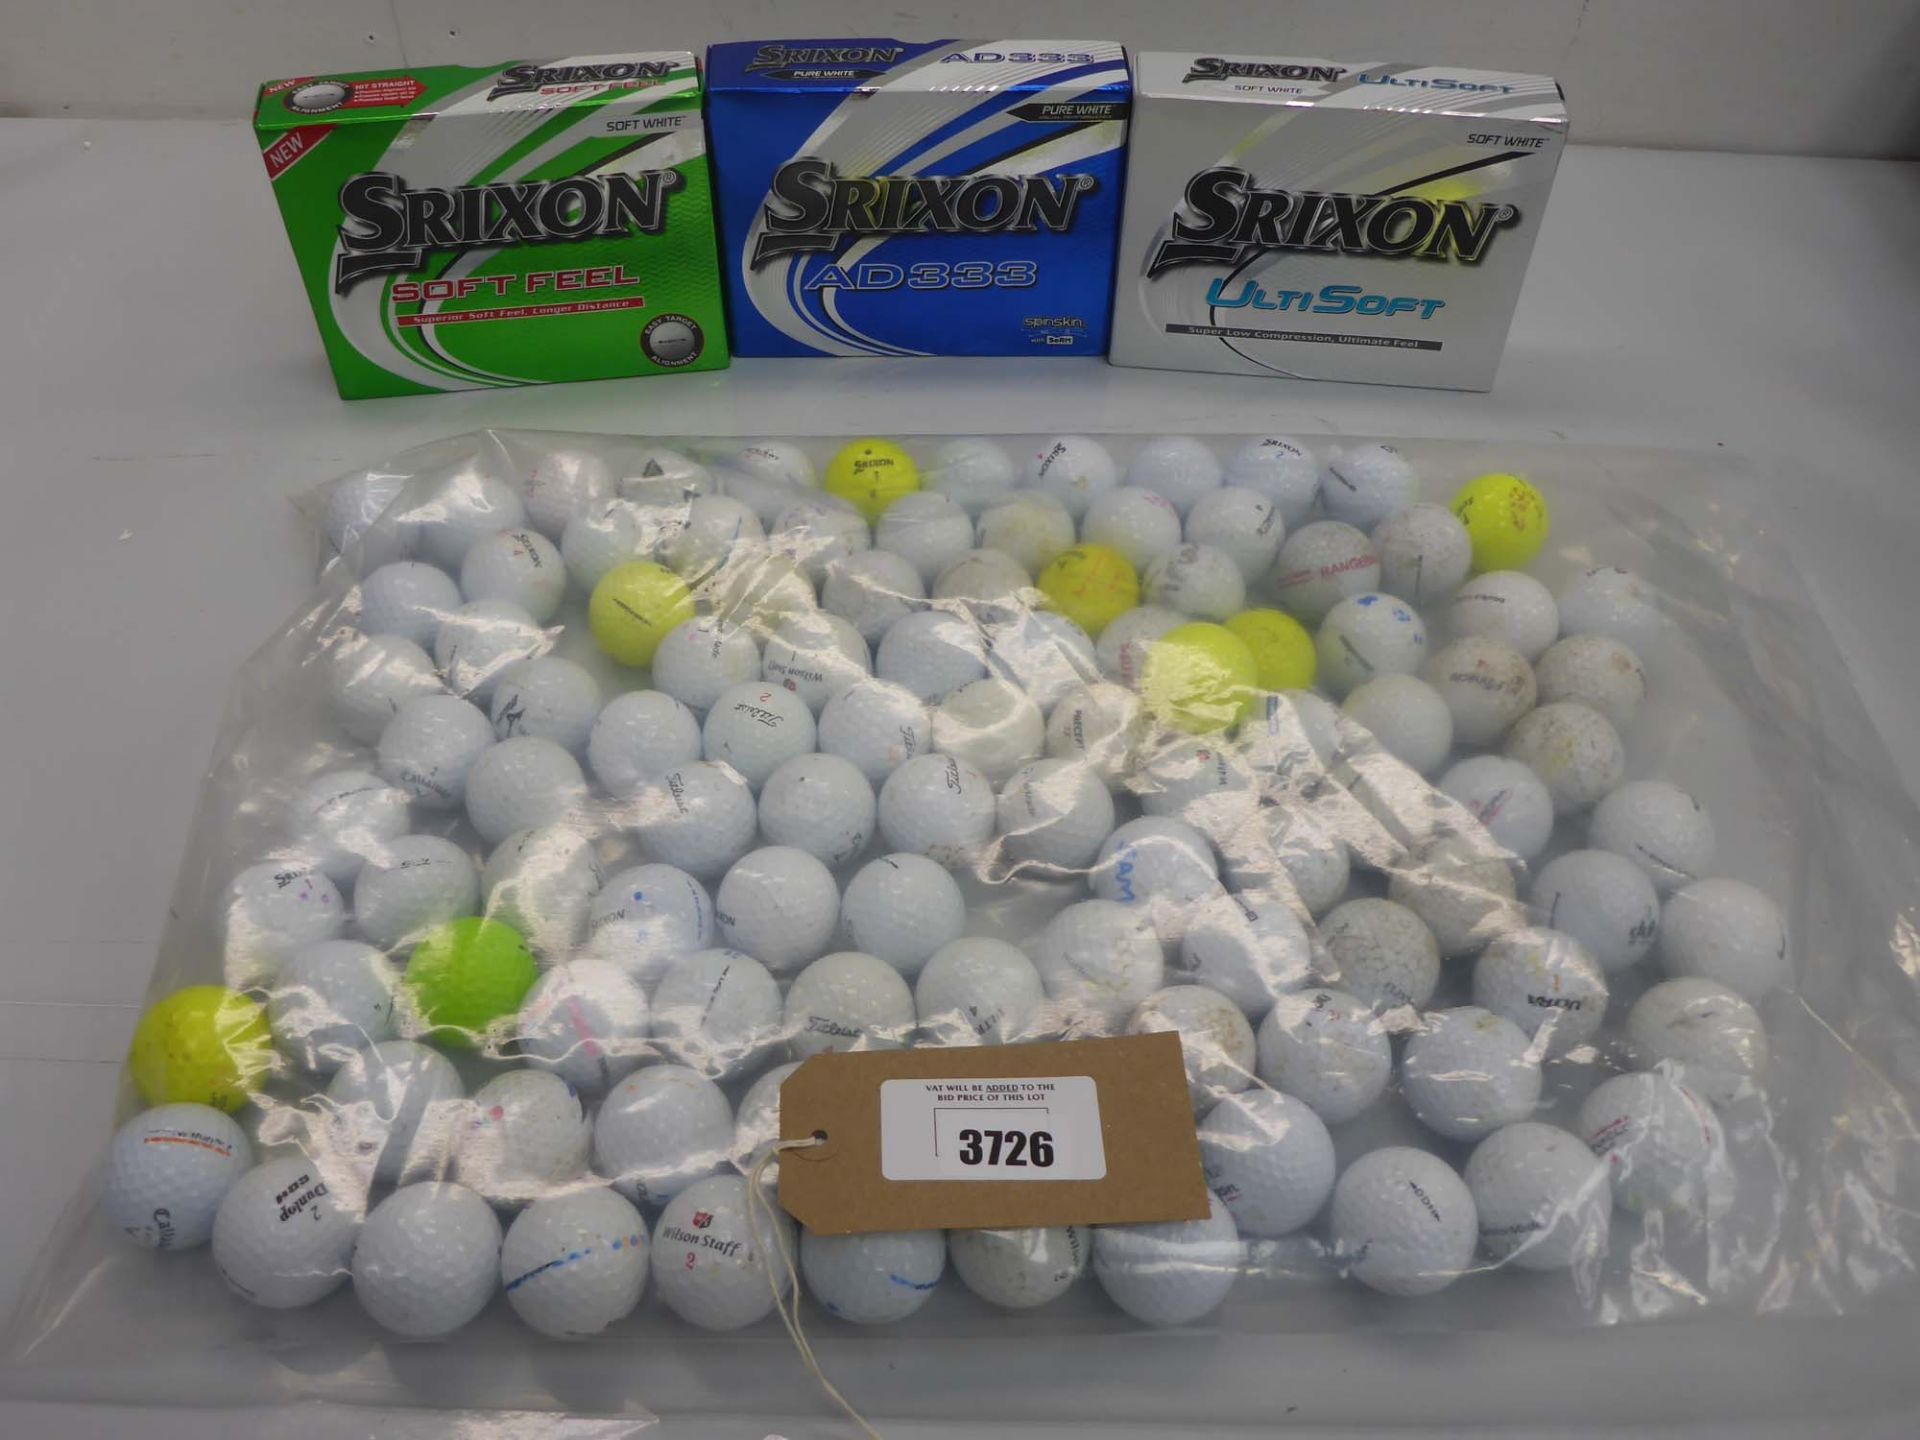 3 boxes of Srixon Soft feel, AD333 & UltiSoft golf balls and large quantity of used golf balls